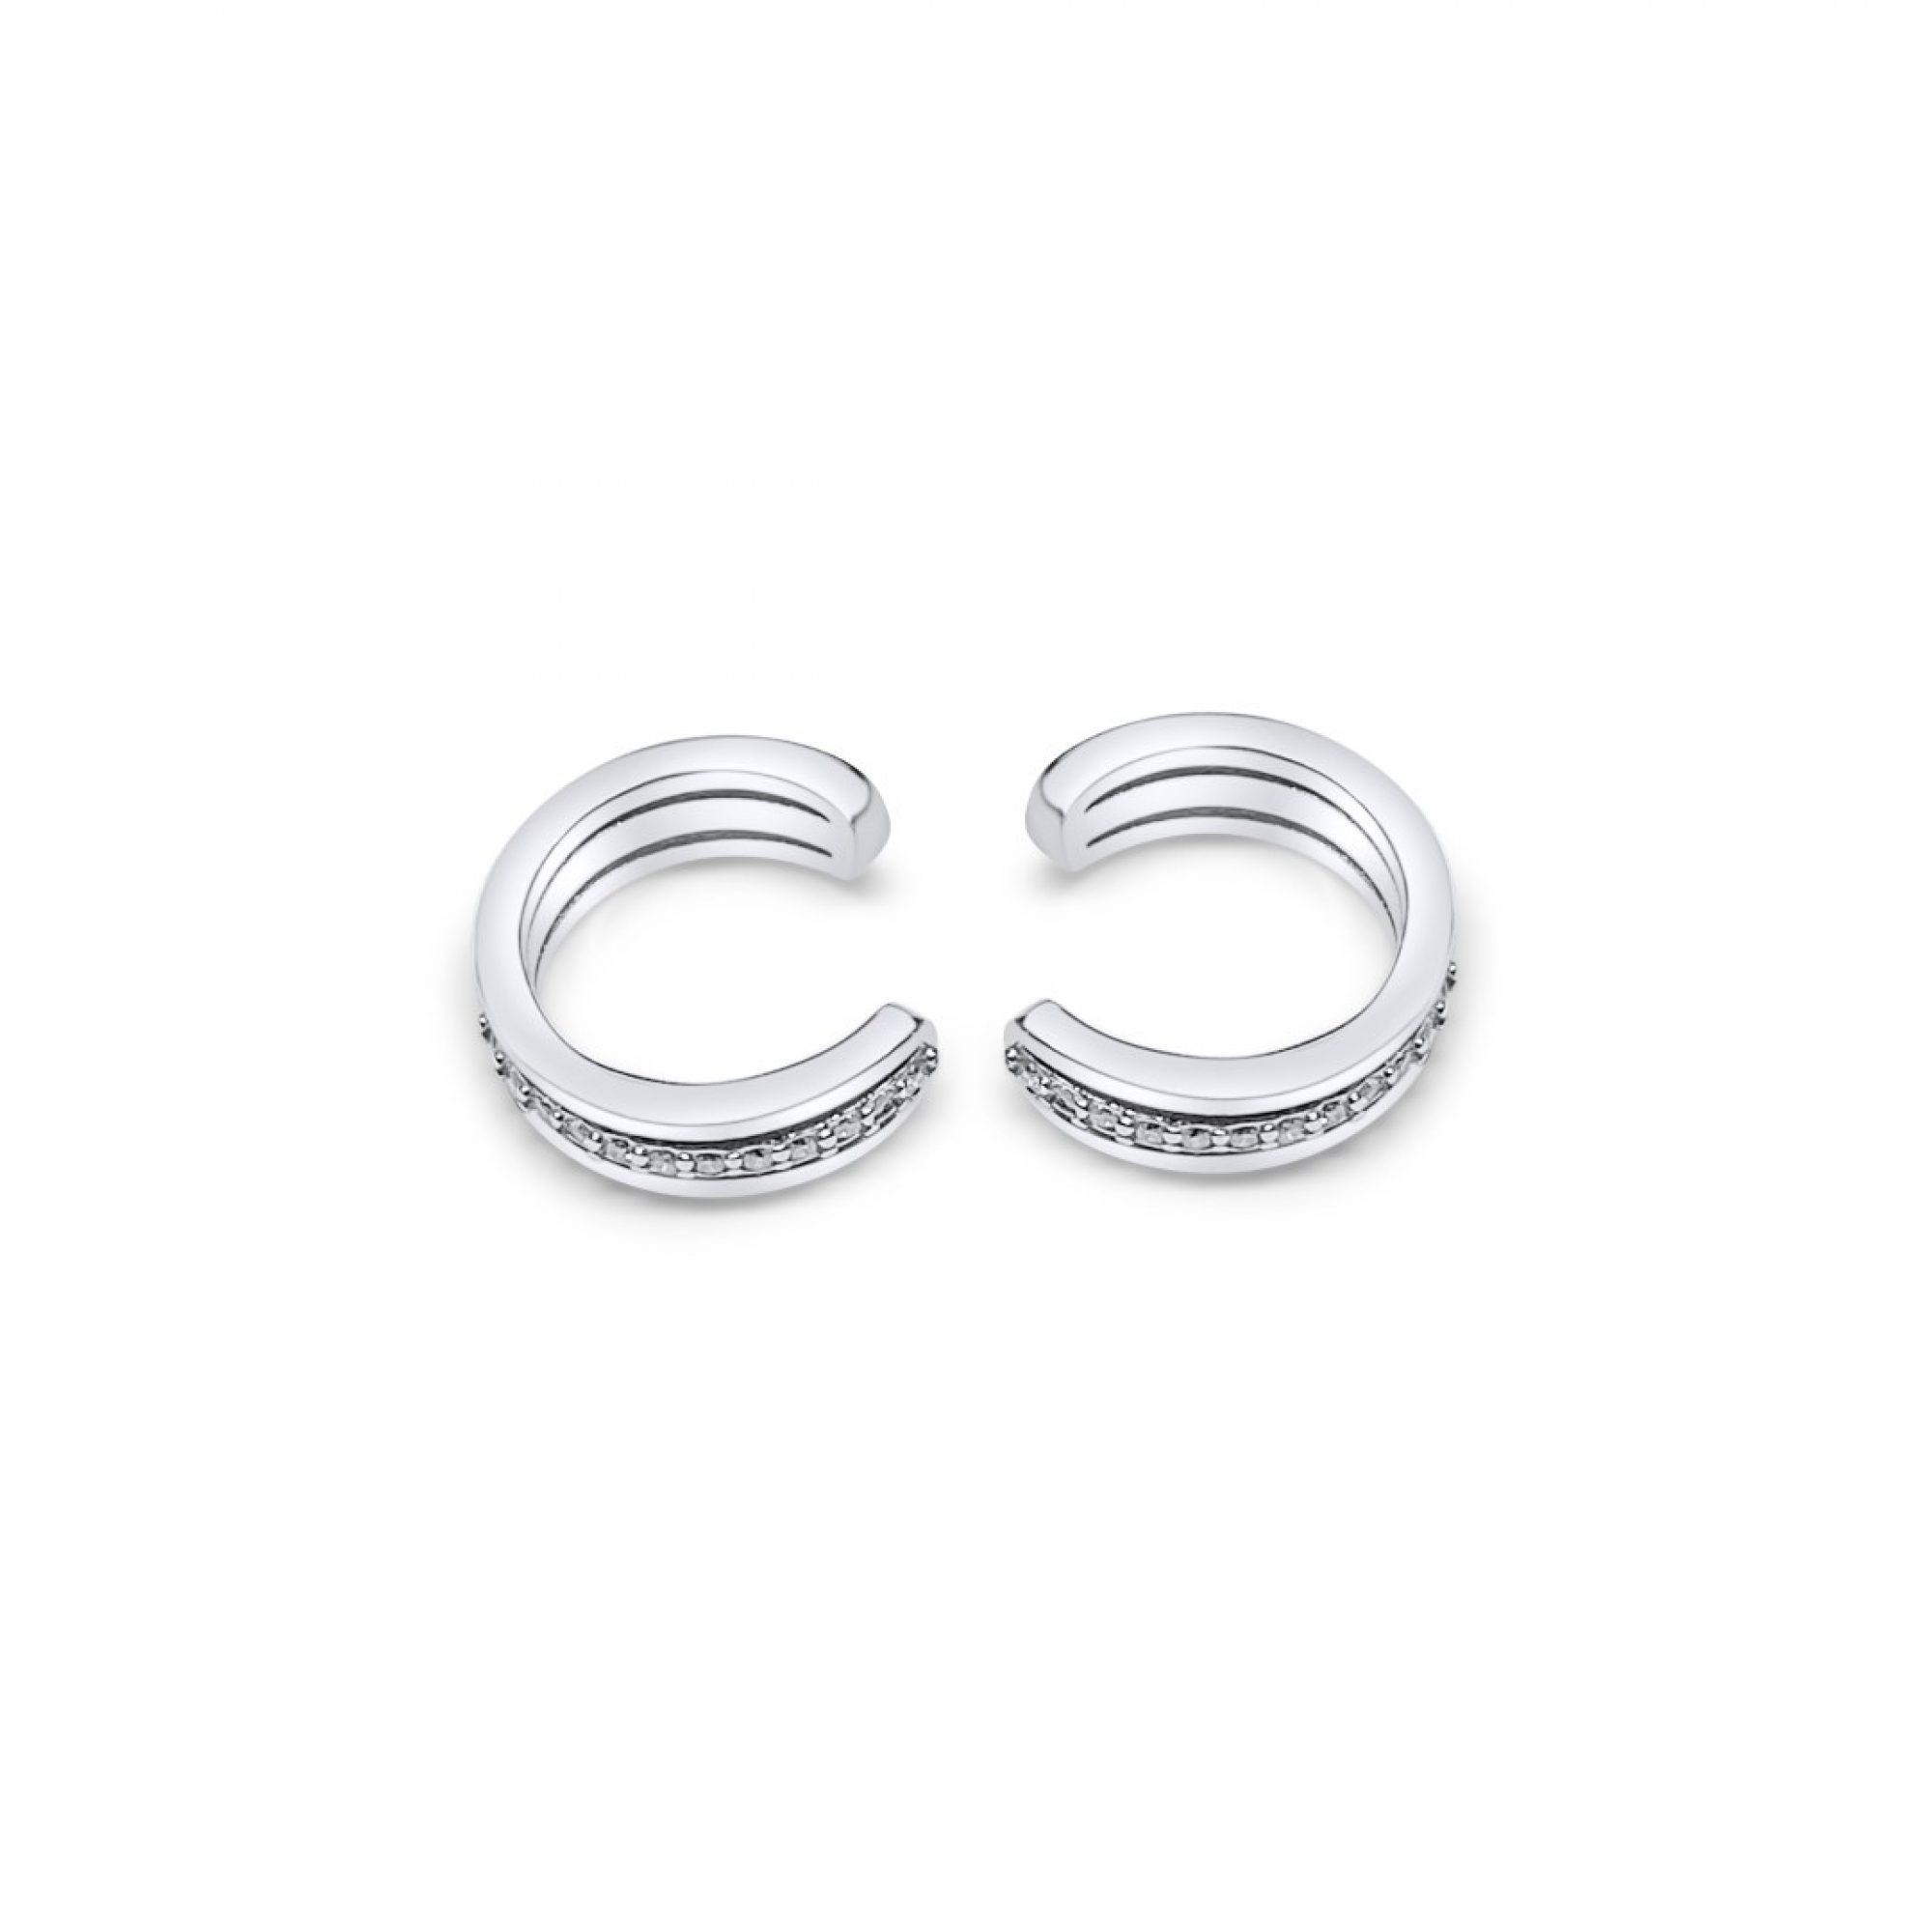 Silver ear cuffs with zircon stones